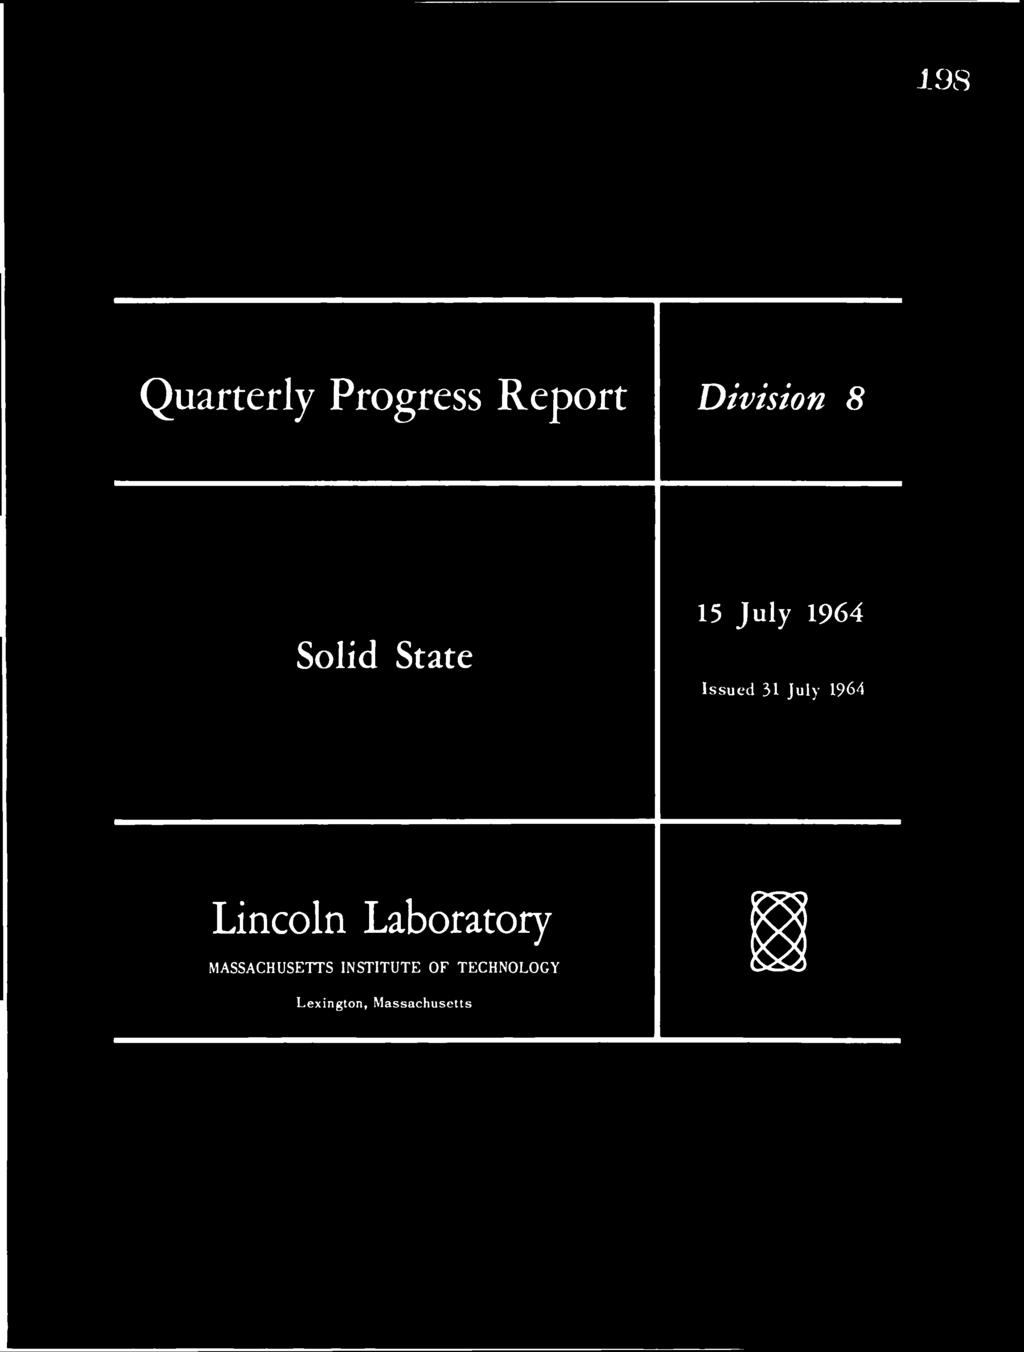 1964 Lincoln Laboratory MASSACHUSETTS